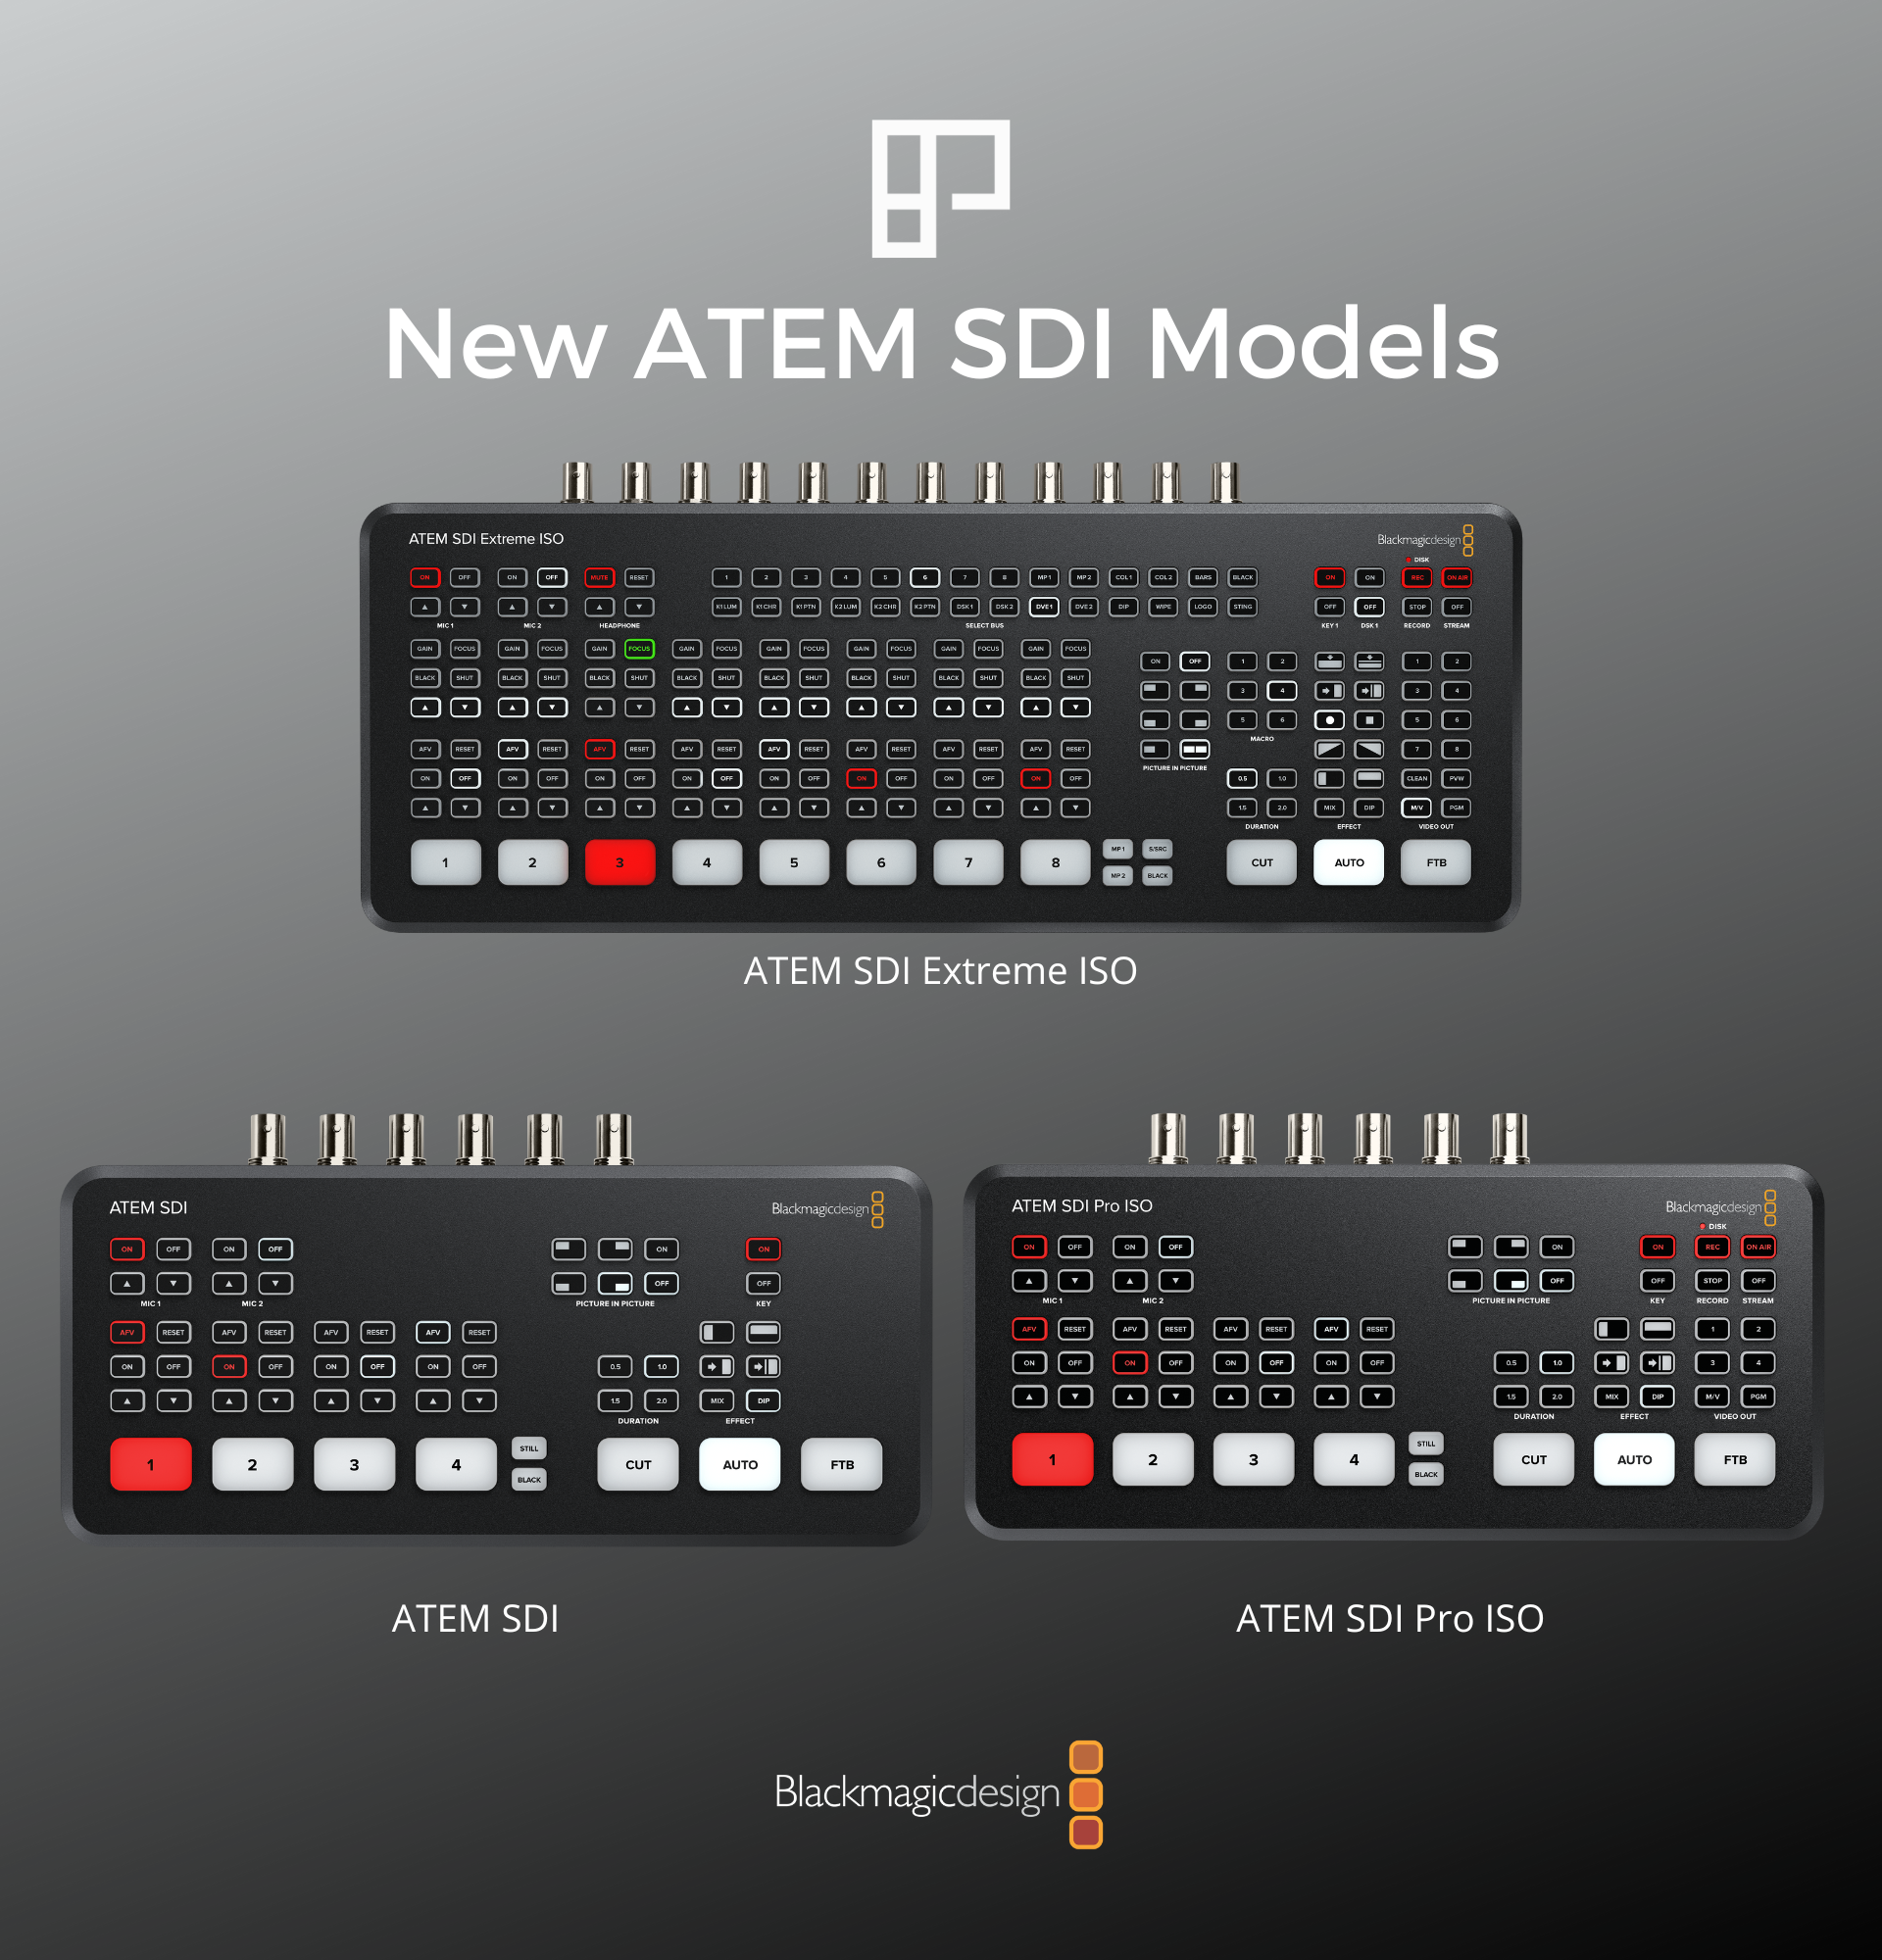 New ATEM SDI Models